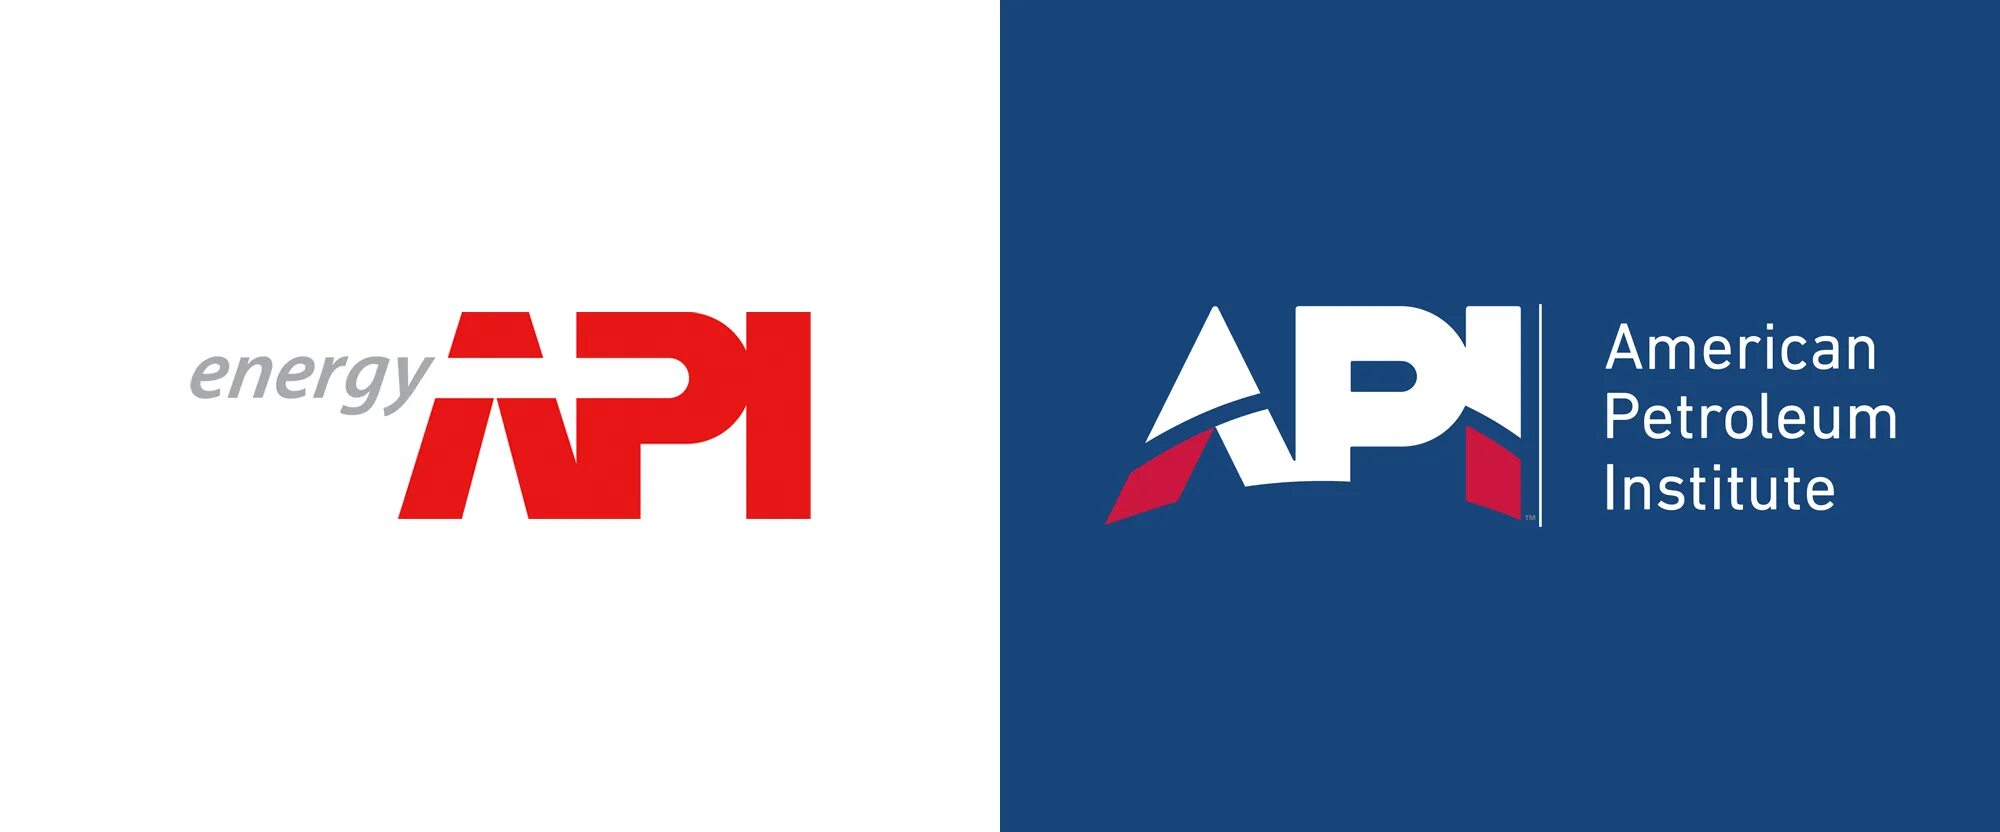 Американский институт нефти. API American Petroleum Institute. API логотип. Американского института нефти лого. Api energy